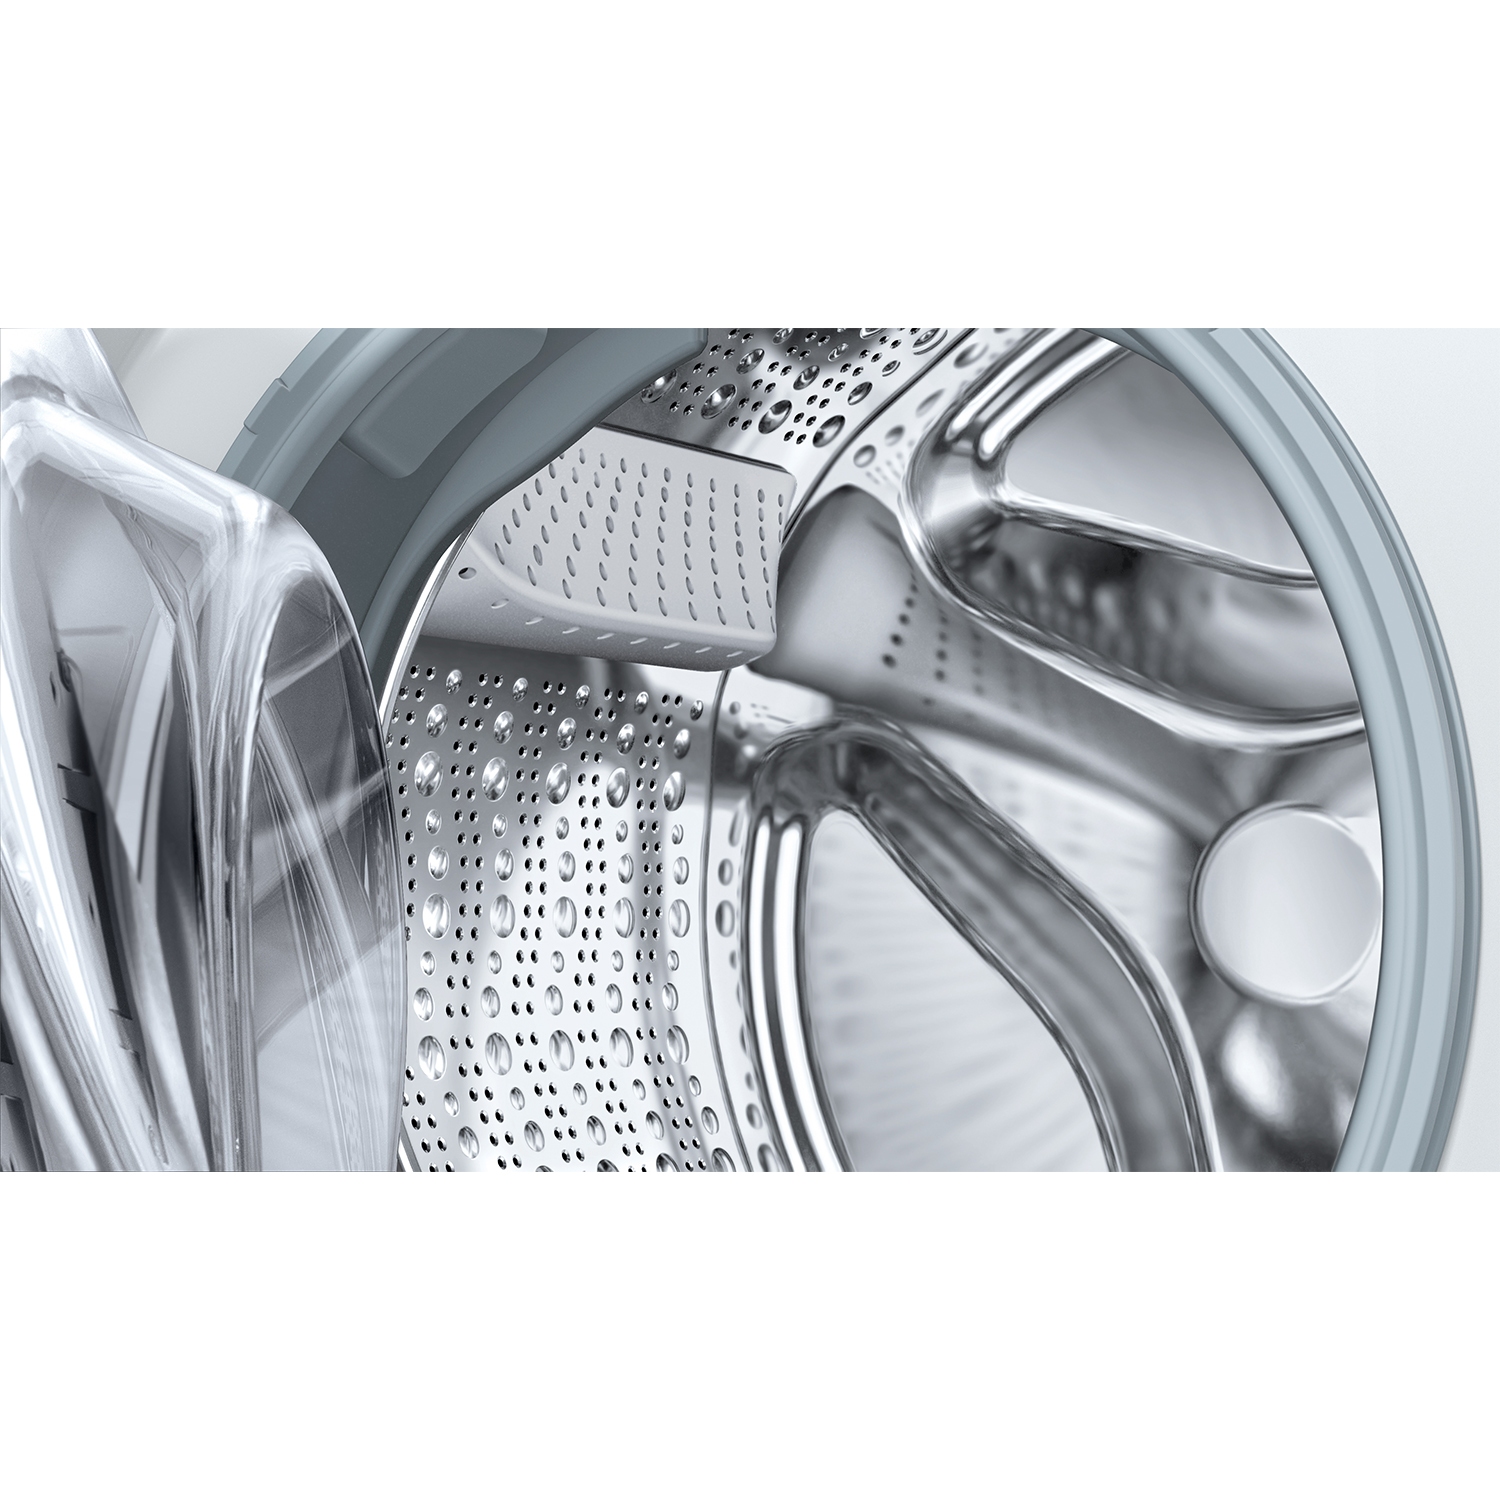 Siemens extraKlasse WM14UT83GB 8kg 1400 Spin Washing Machine with Reload Function - White - 2